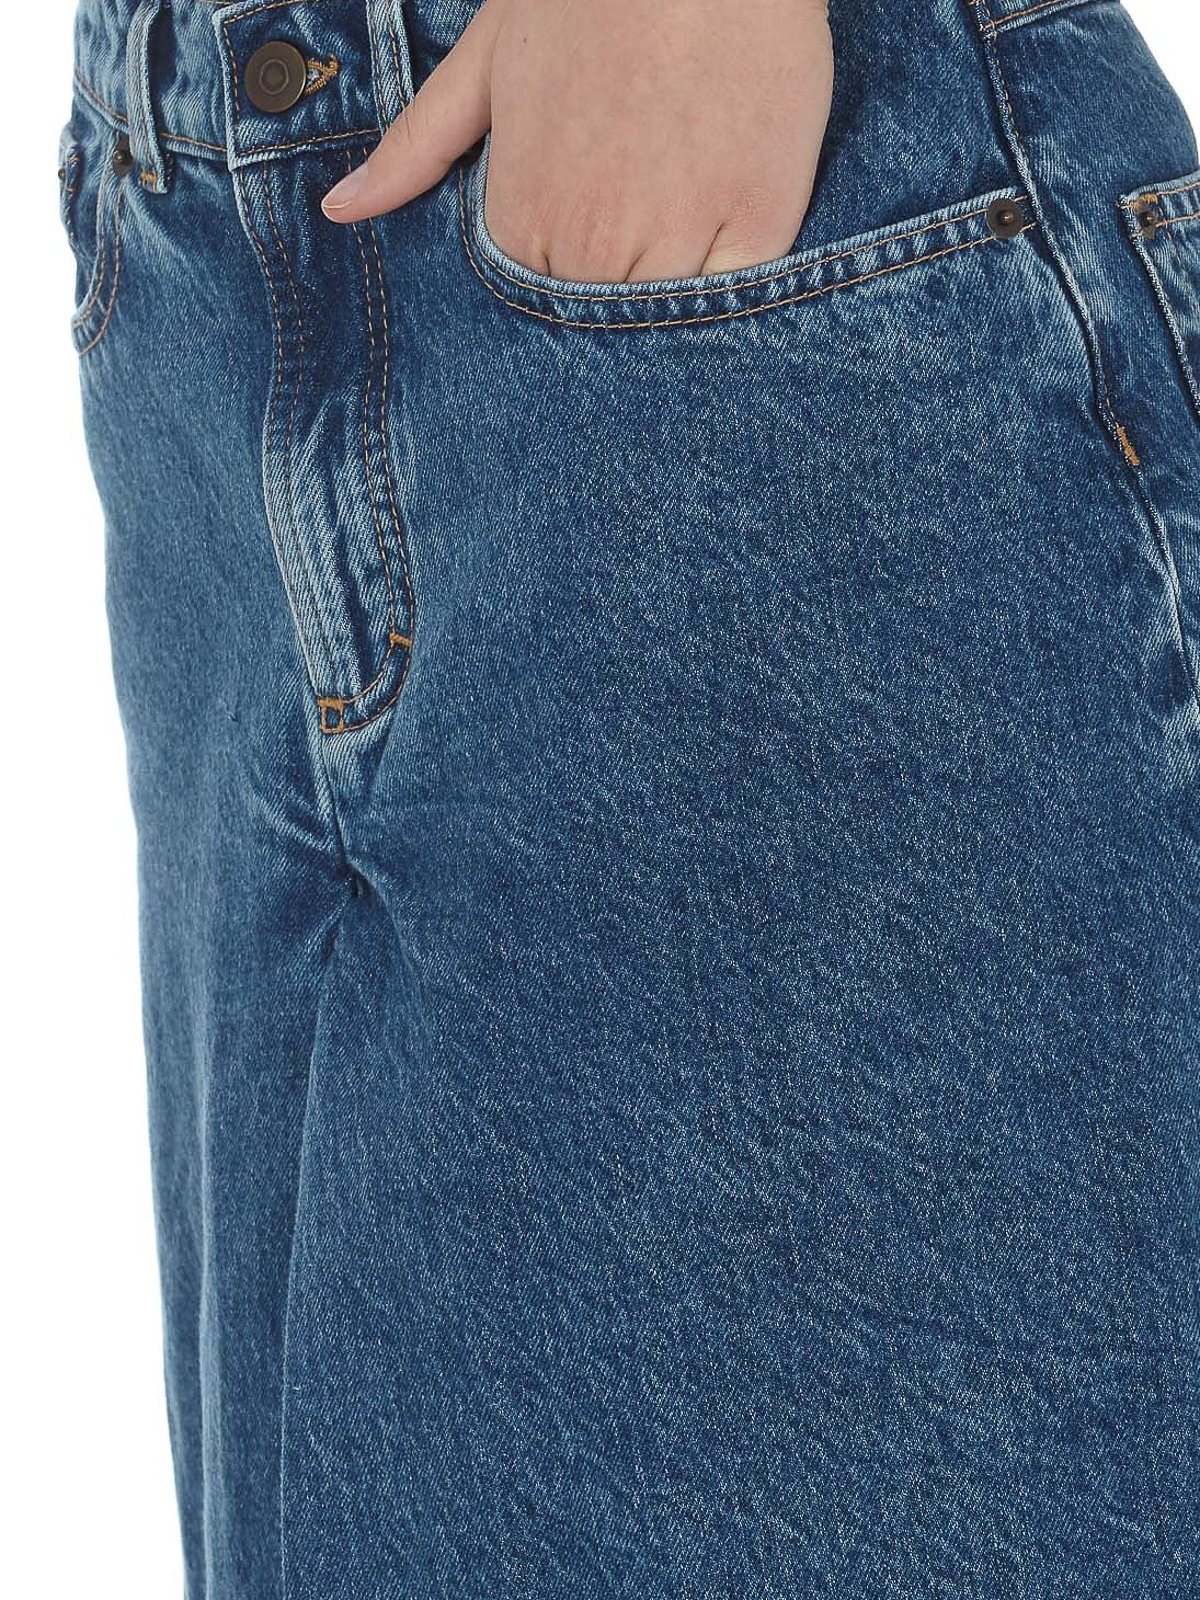 Flared jeans Maison Margiela - Spliced culotte jeans